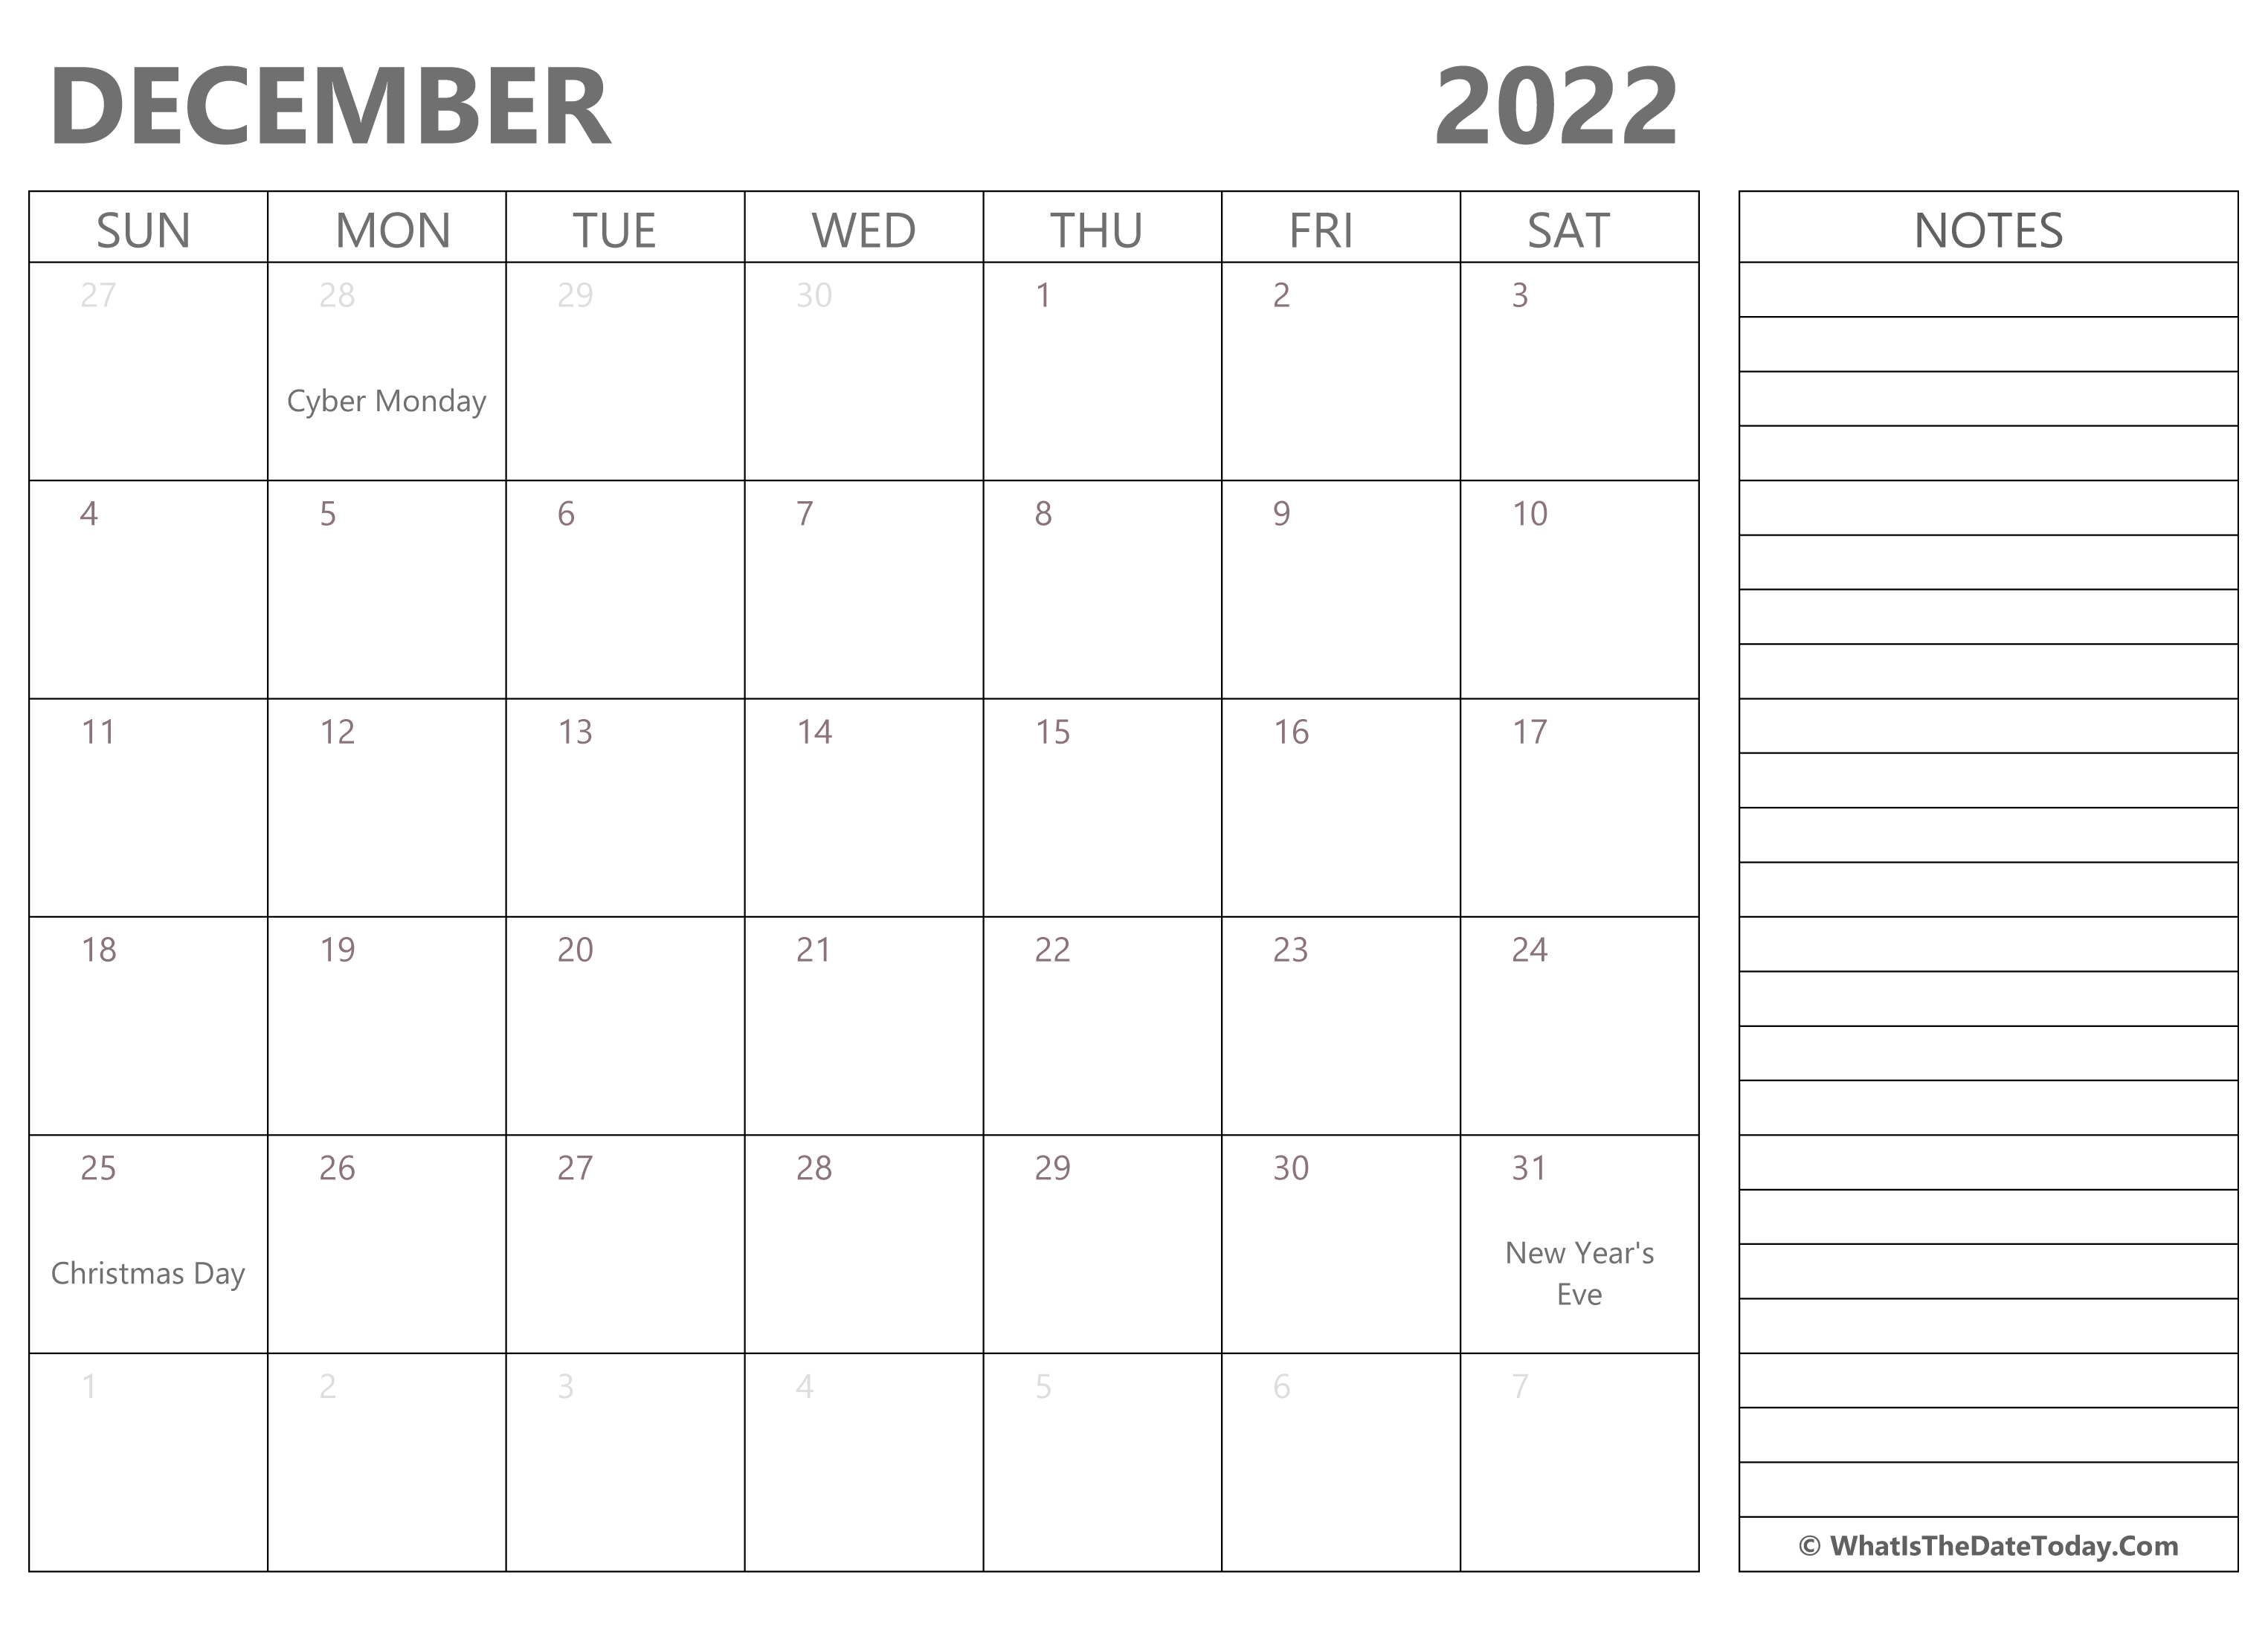 December 2022 Calendar Editable Editable December 2022 Calendar With Holidays And Notes |  Whatisthedatetoday.com